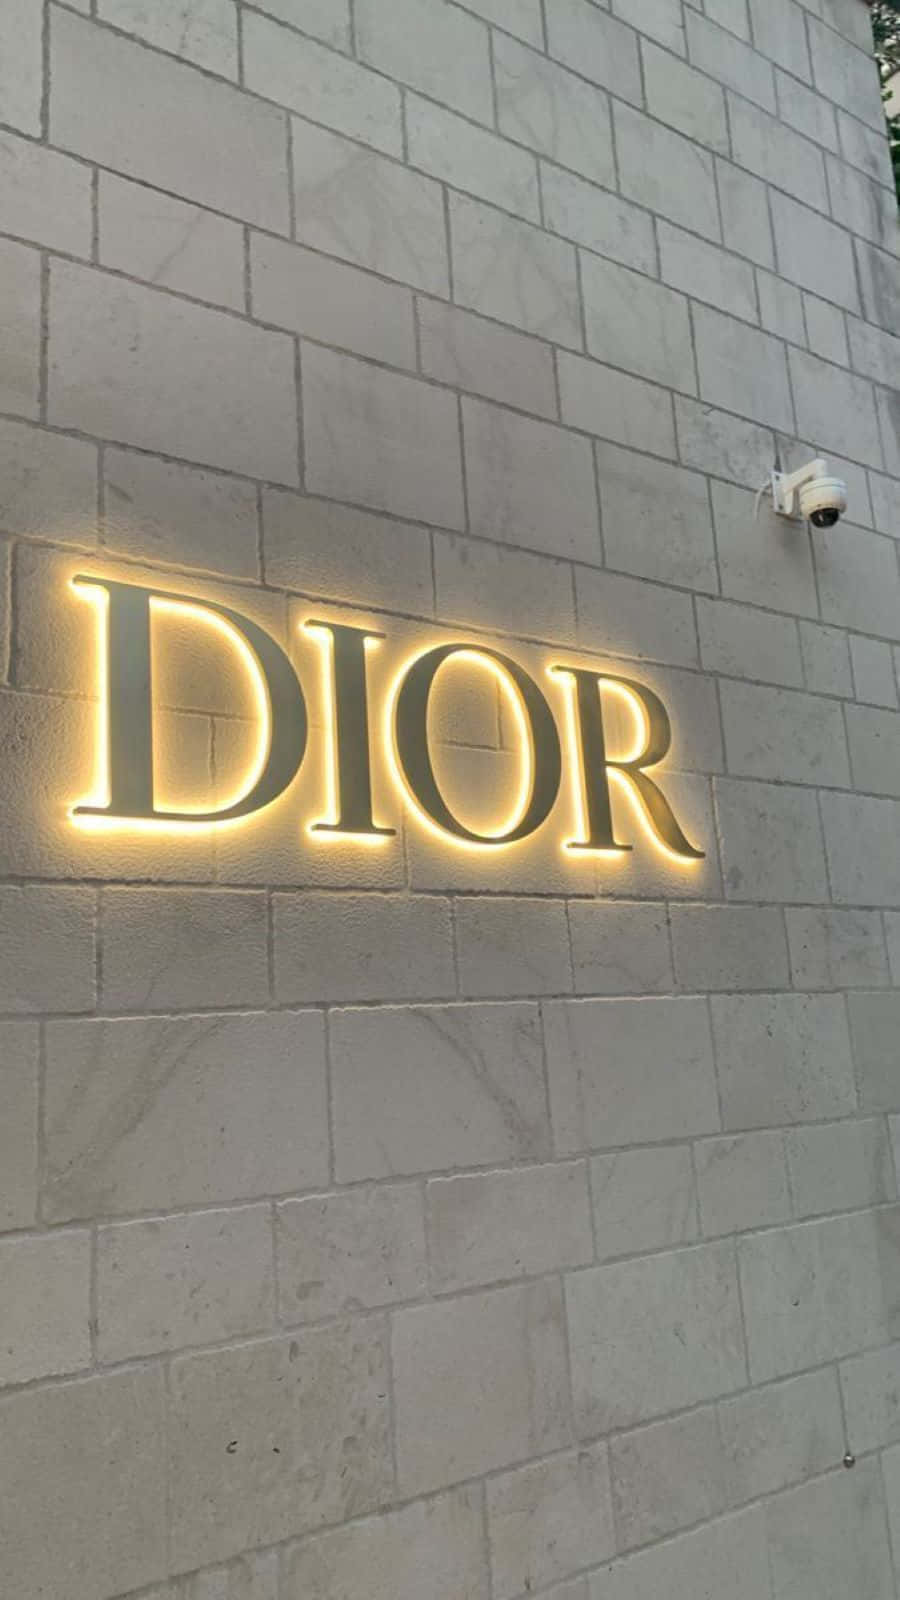 Dior Brand Signage Illuminated Wall Wallpaper